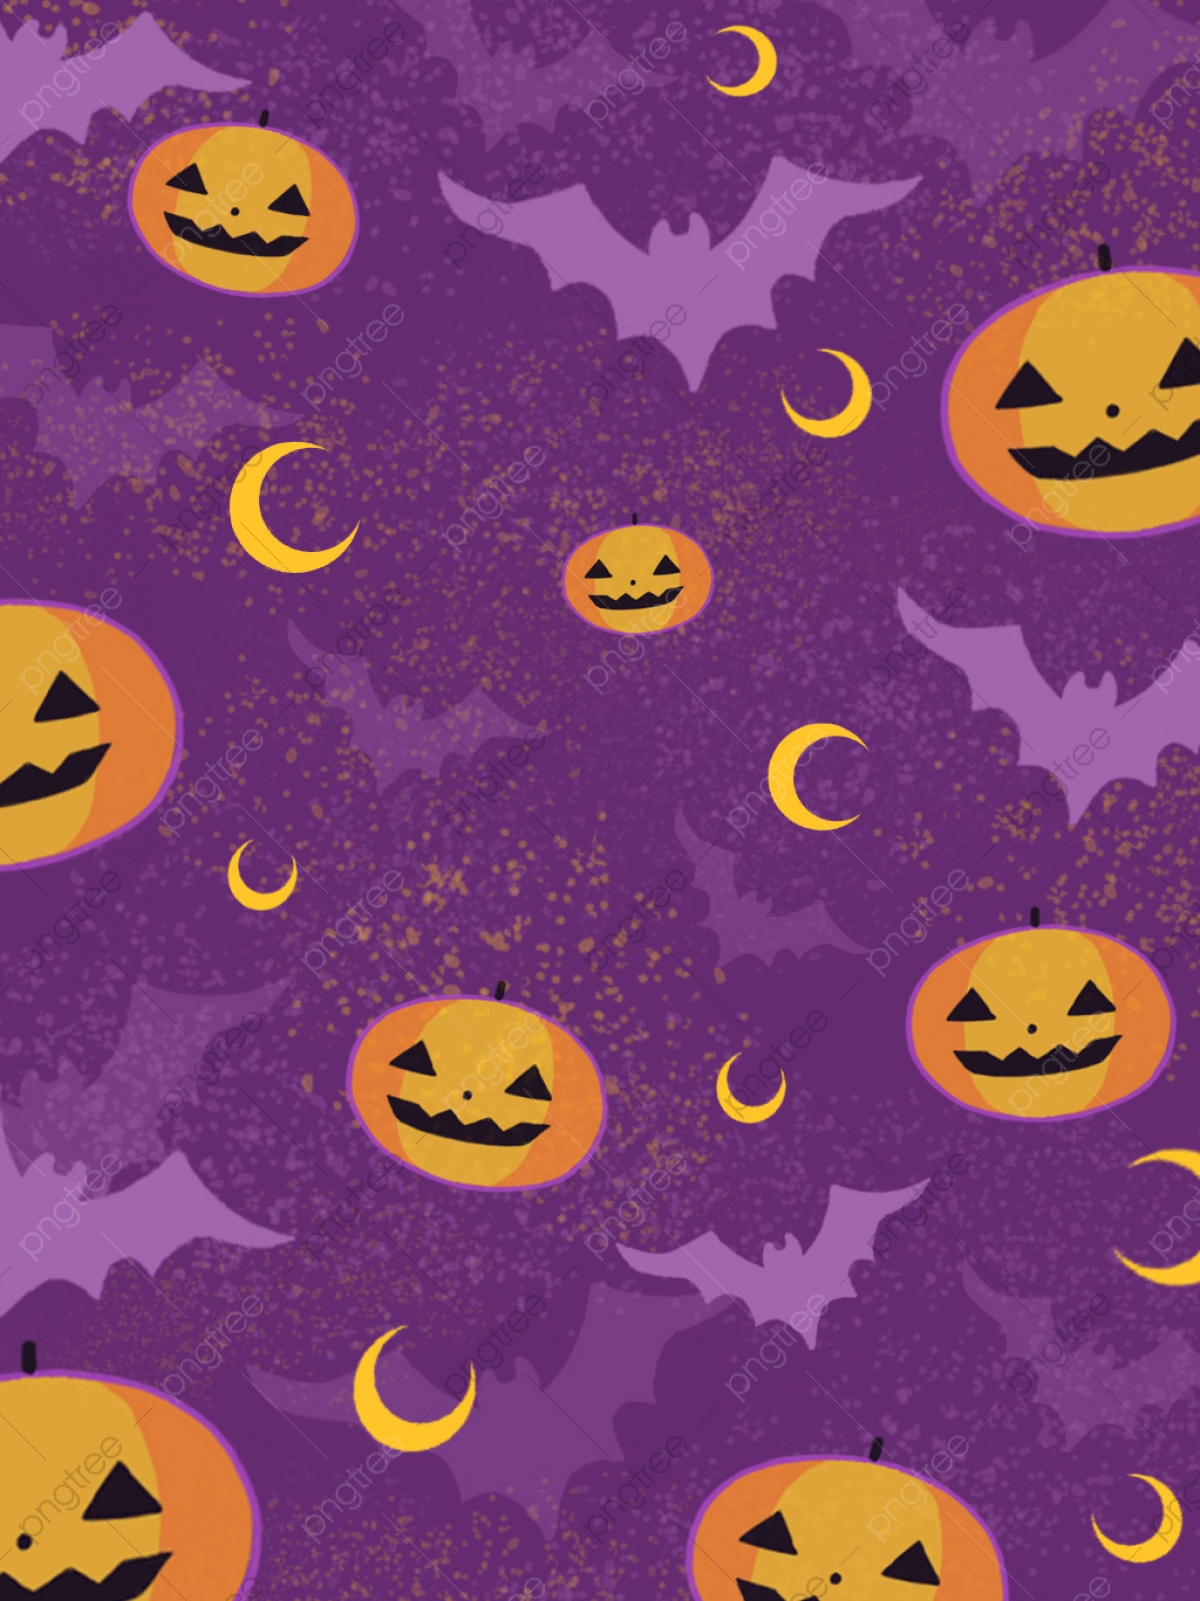 Simple Halloween Background